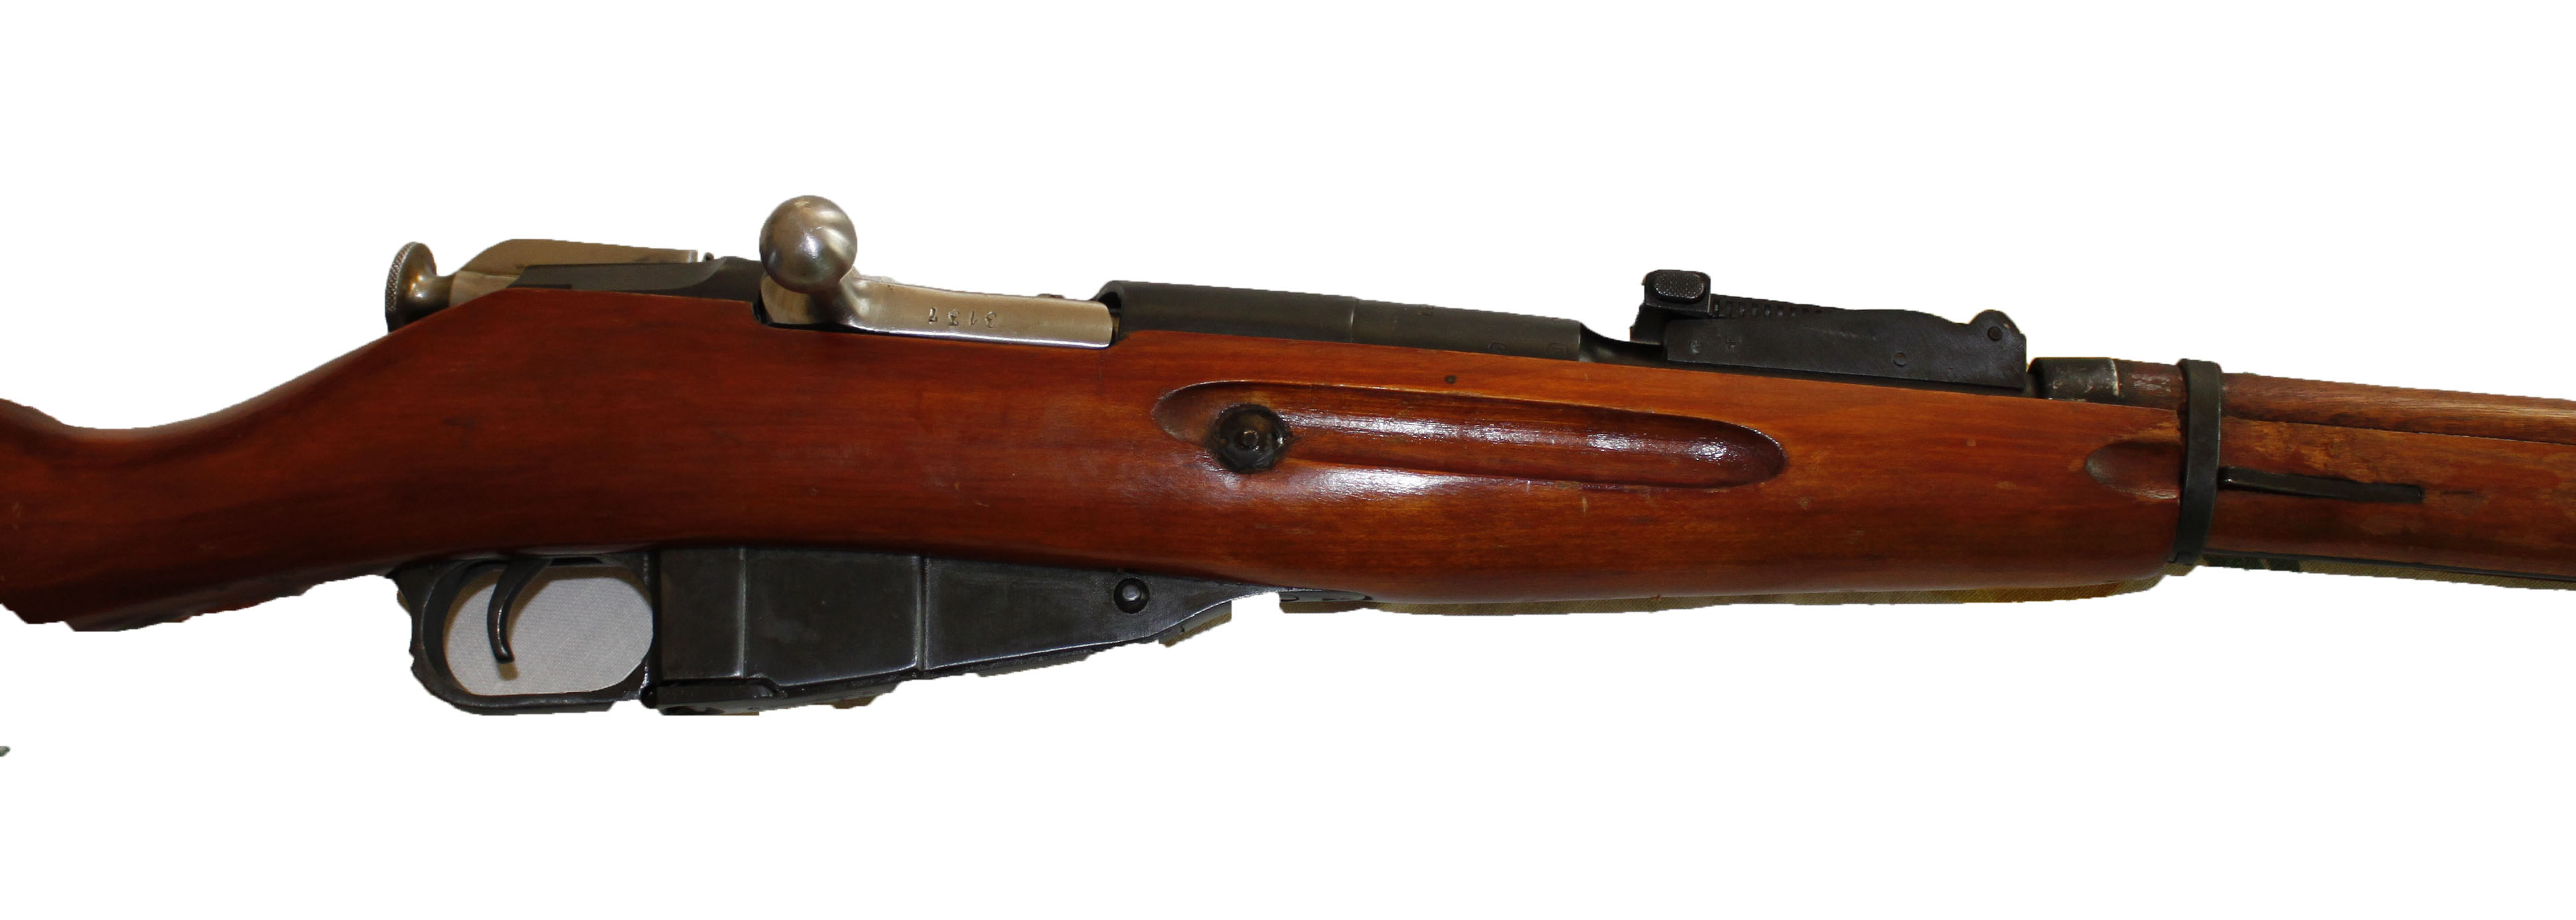 wooden toy "Sniper Mosin Nagant rifle" with orange barrel marking 